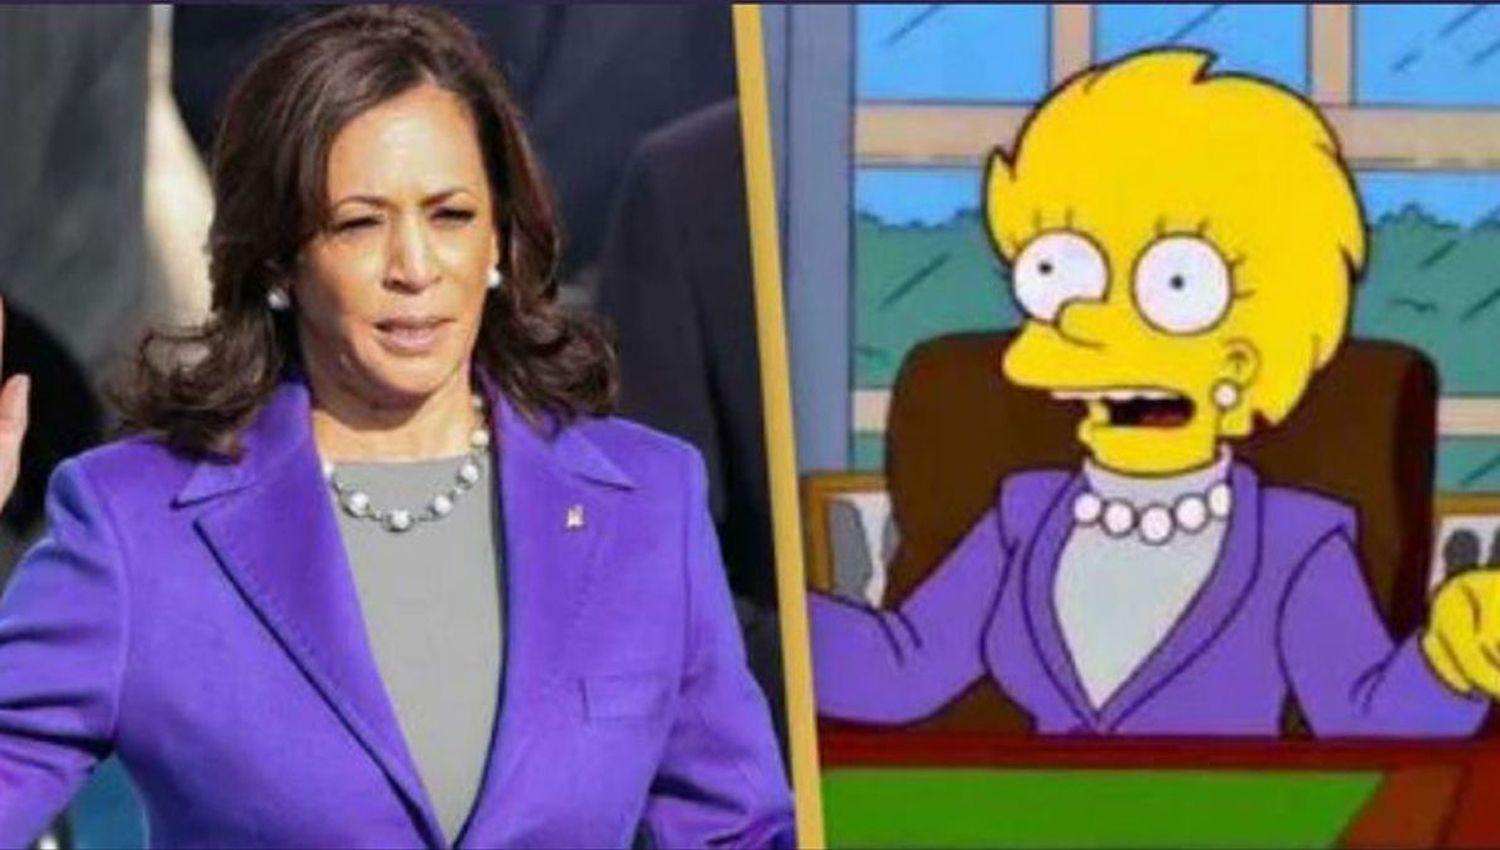 Los Simpson ldquopredijeronrdquo el arribo de Kamala Harris en la Casa Blanca